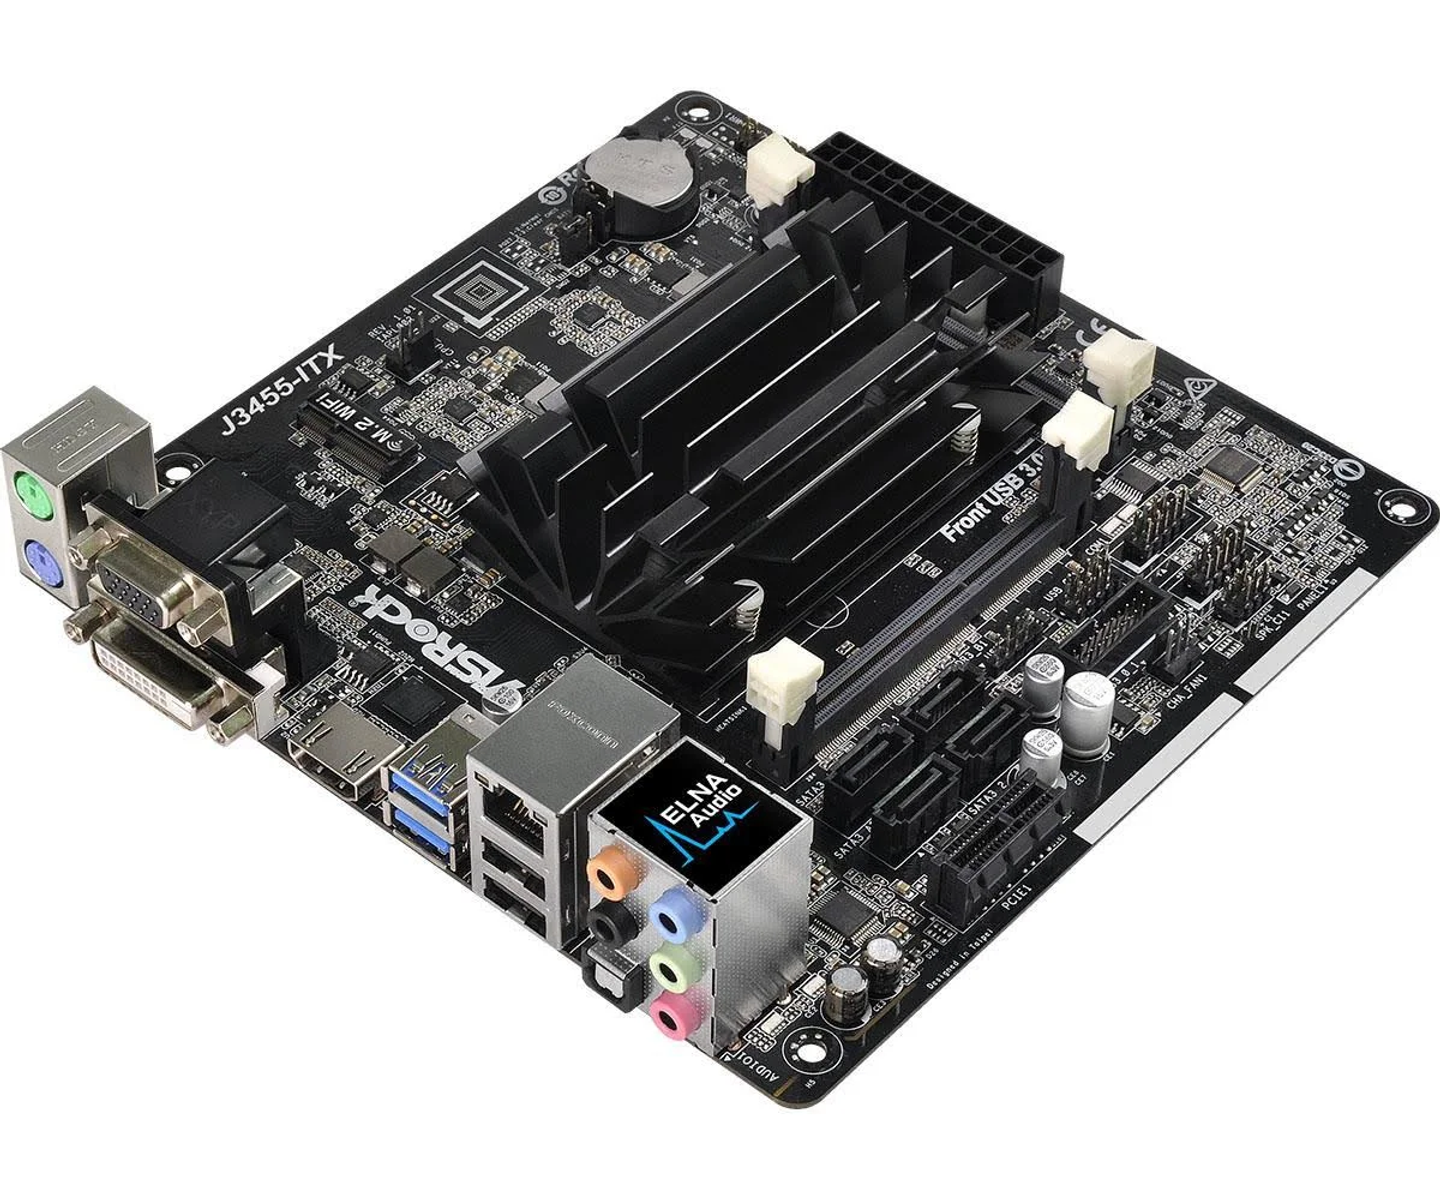 Black J3455-ITX + Bundle Mainboard CPU ASROCK